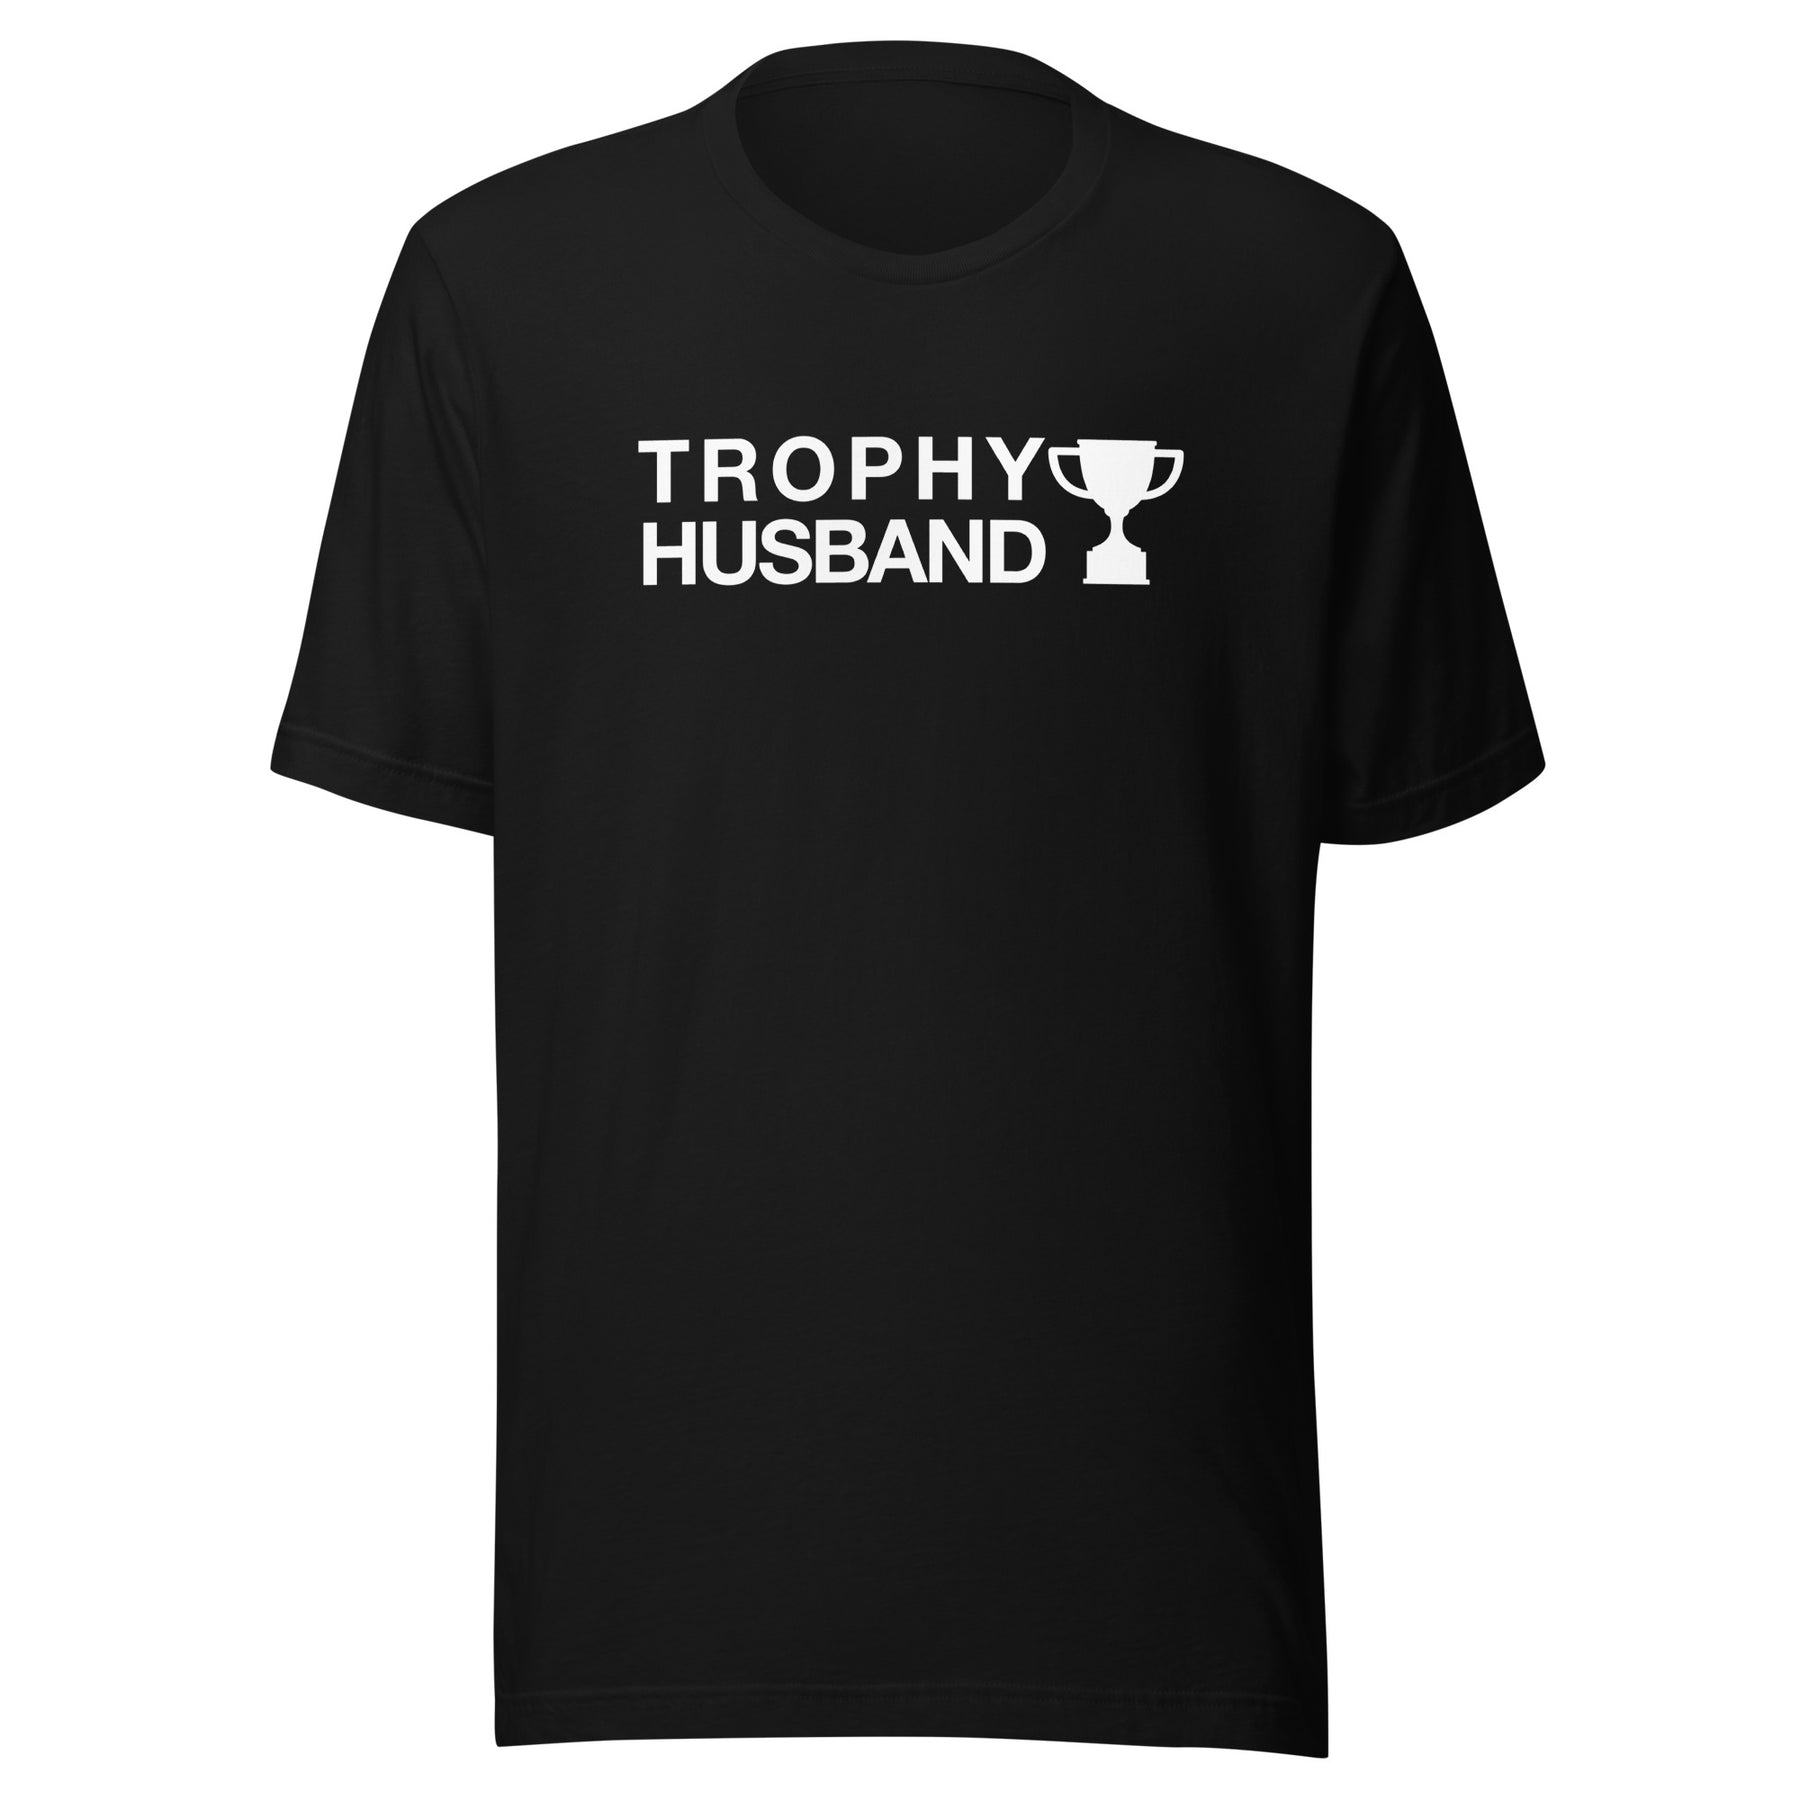 SNEAKER THRONE Trophy Husband